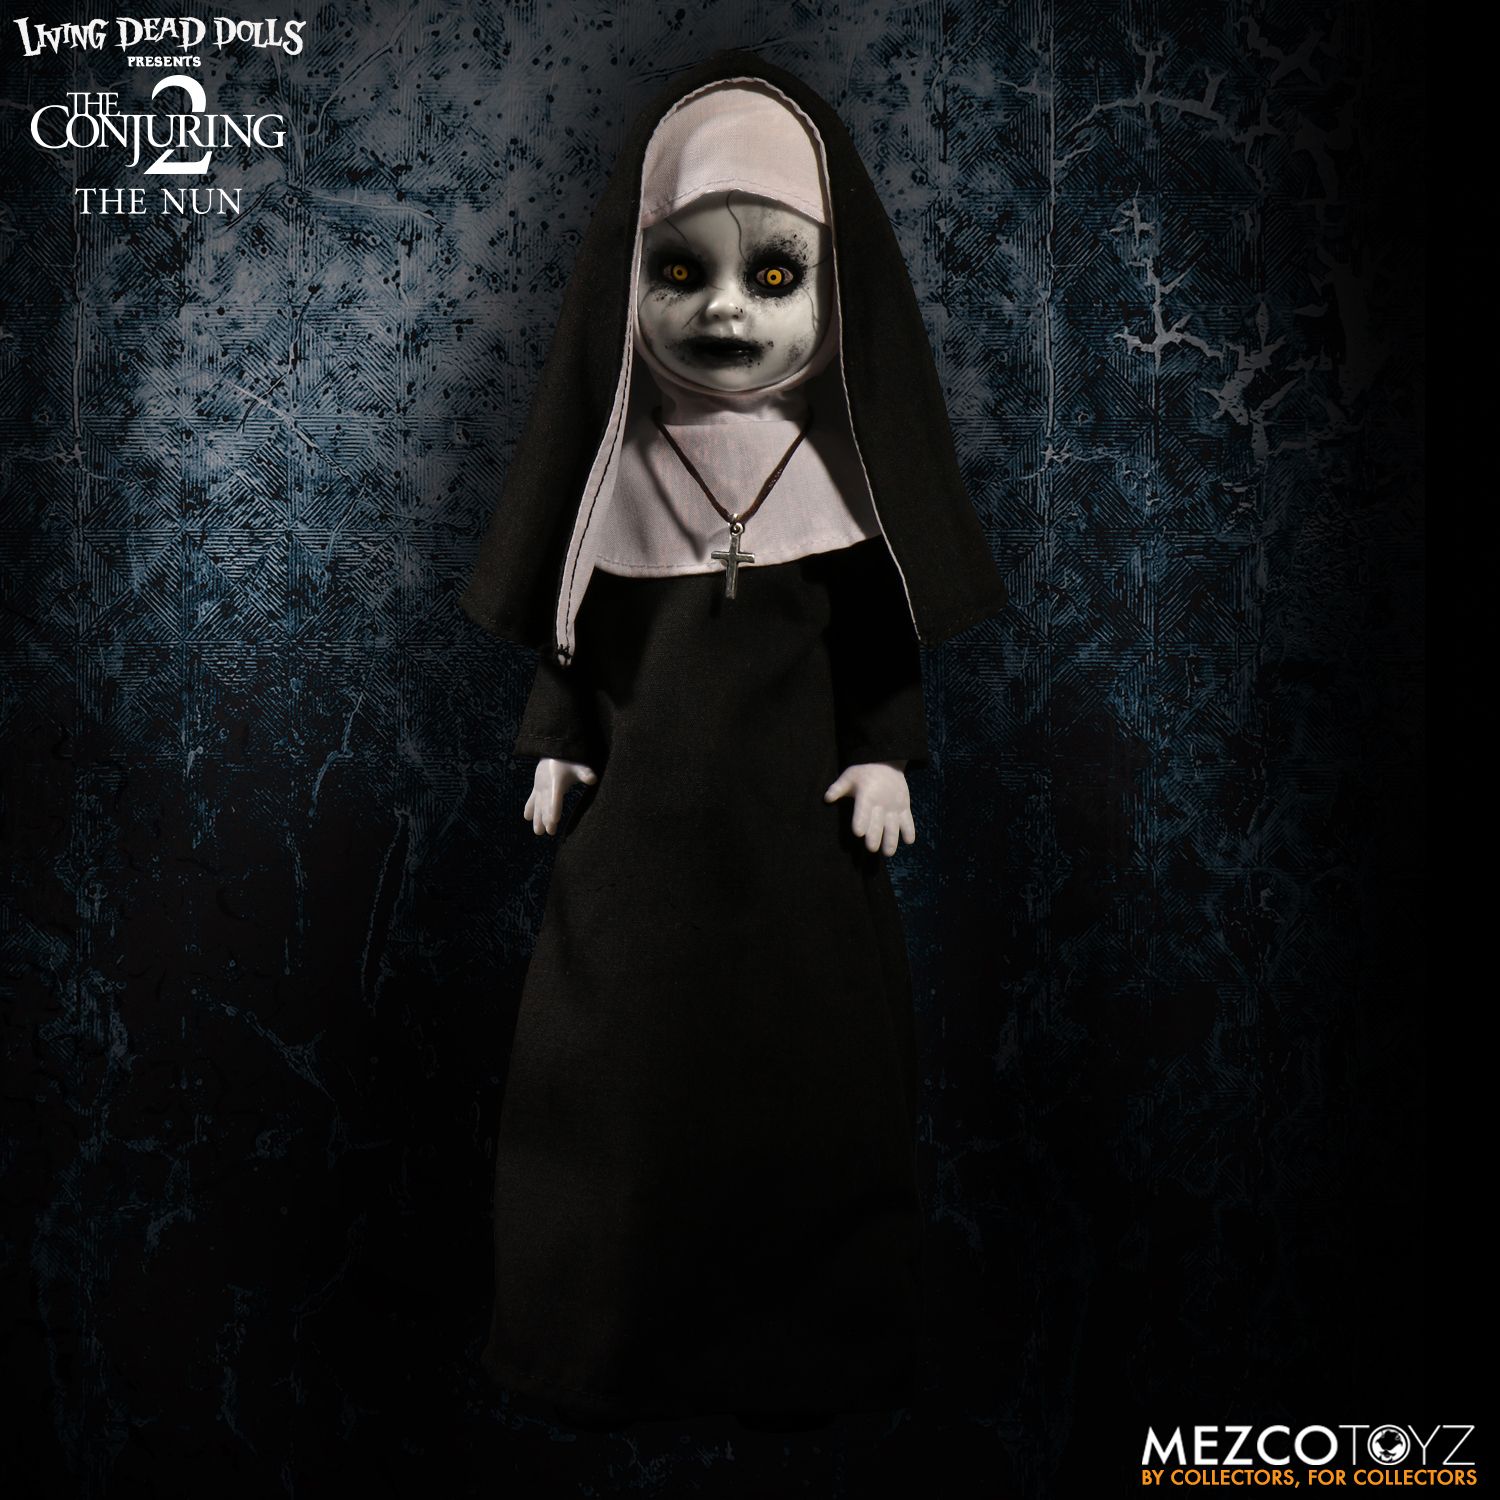 Mezco Conjuring The Nun Living Dead Doll